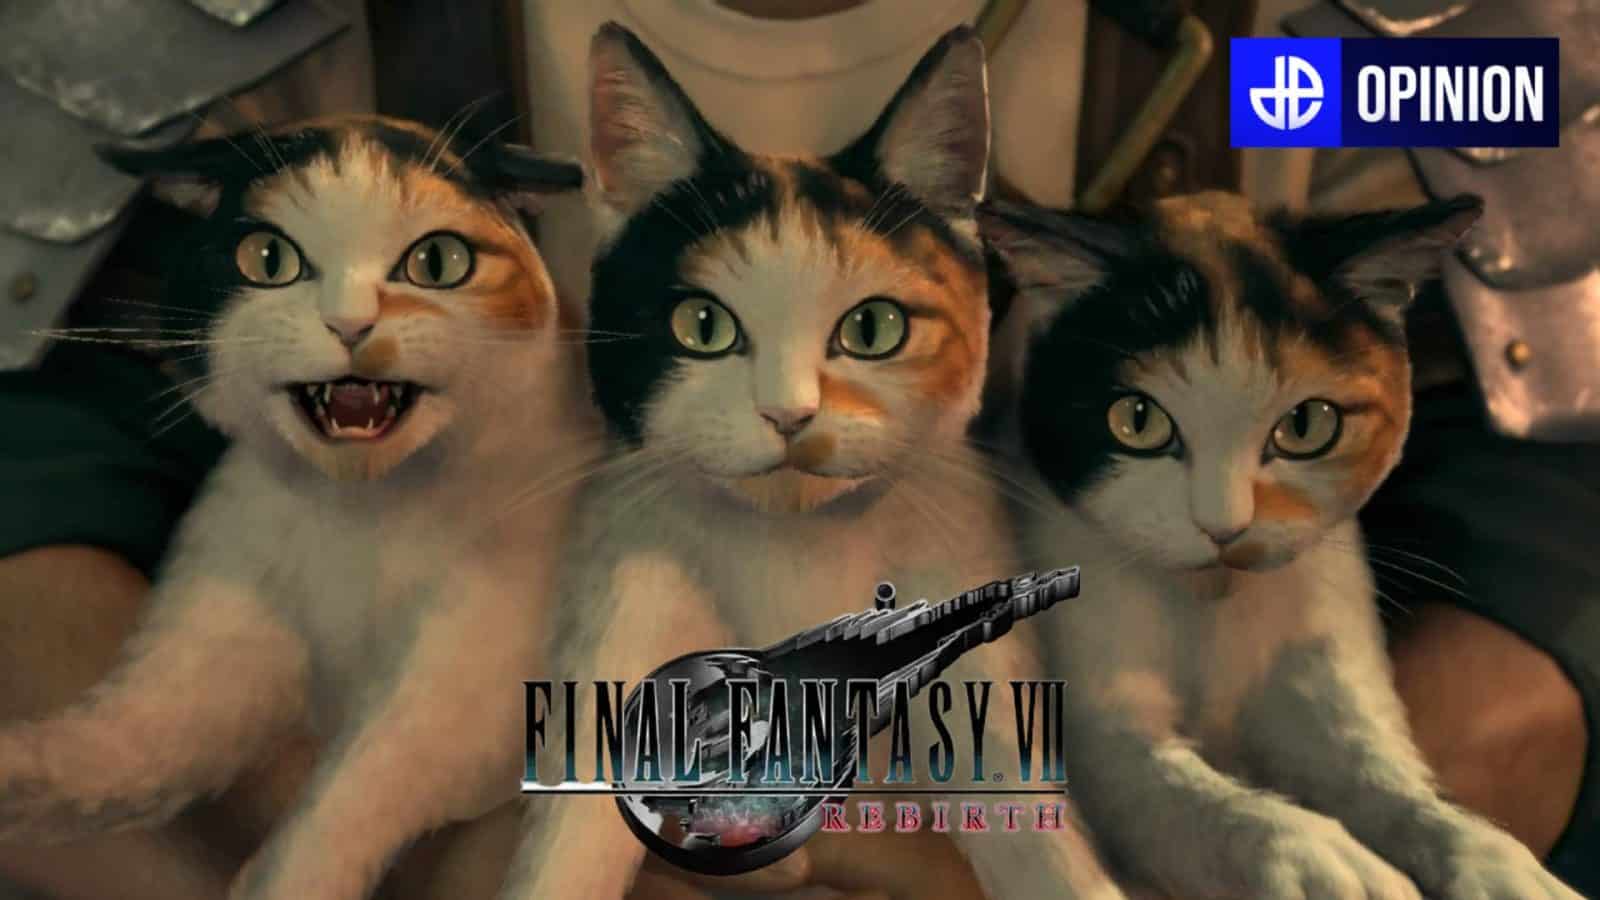 lsot cats in final fantasy VII remake